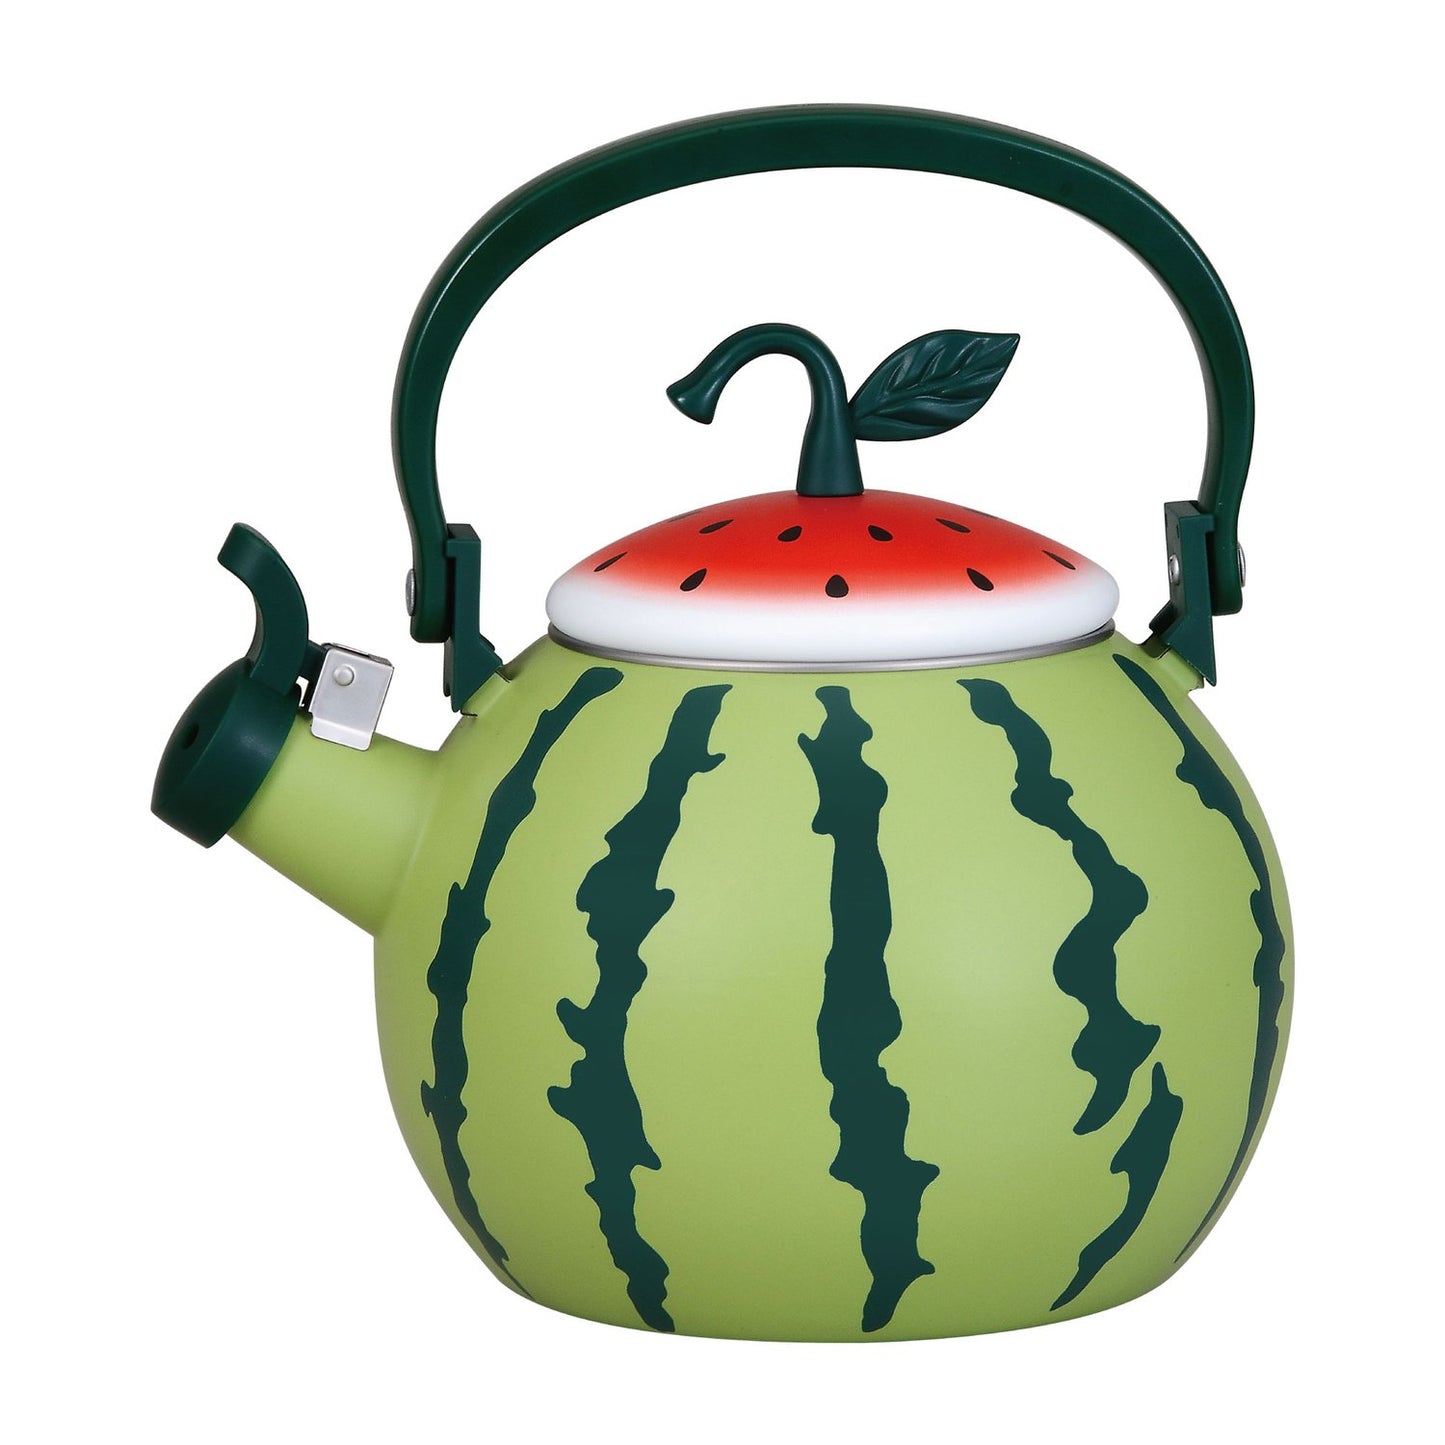 UPware Enamel on Steel Whistling Tea Kettle, Stovetop Teakettle (1.6 Quart, Watermelon)